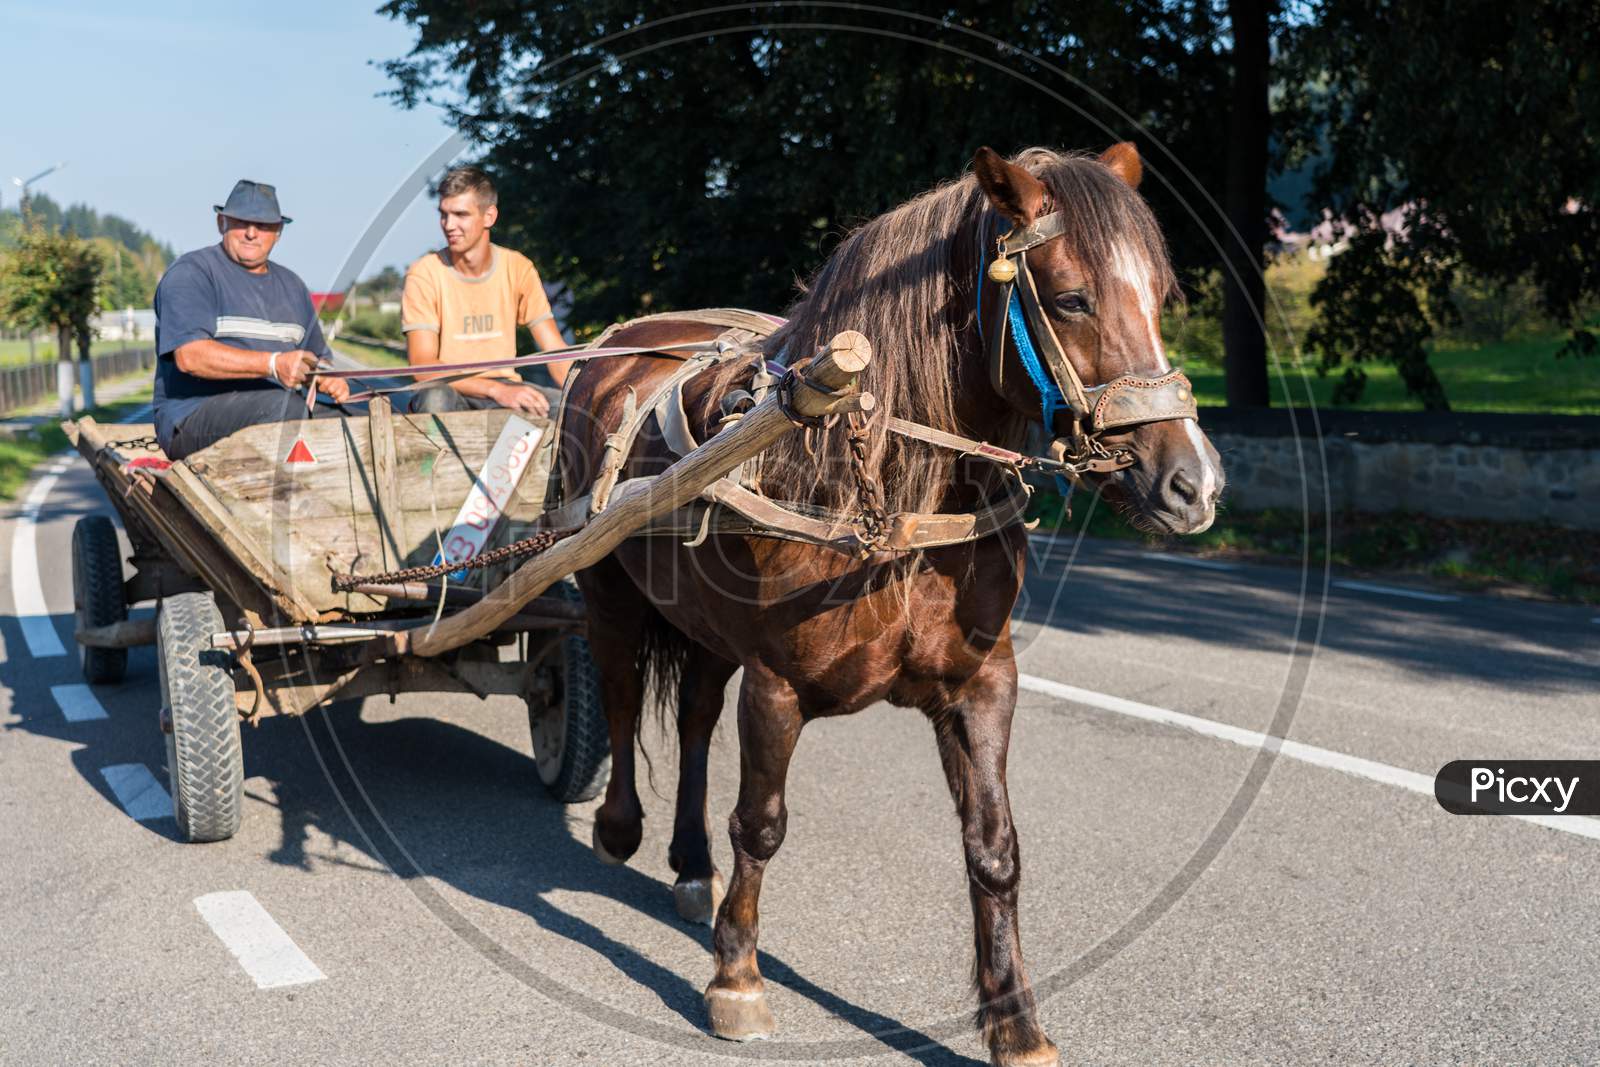 Sucevita, Moldovia/Romania - September 18 : Two Men With A Horse And Cart In Sucevita In Moldovia Romania On September 18, 2018. Two Unidentified People